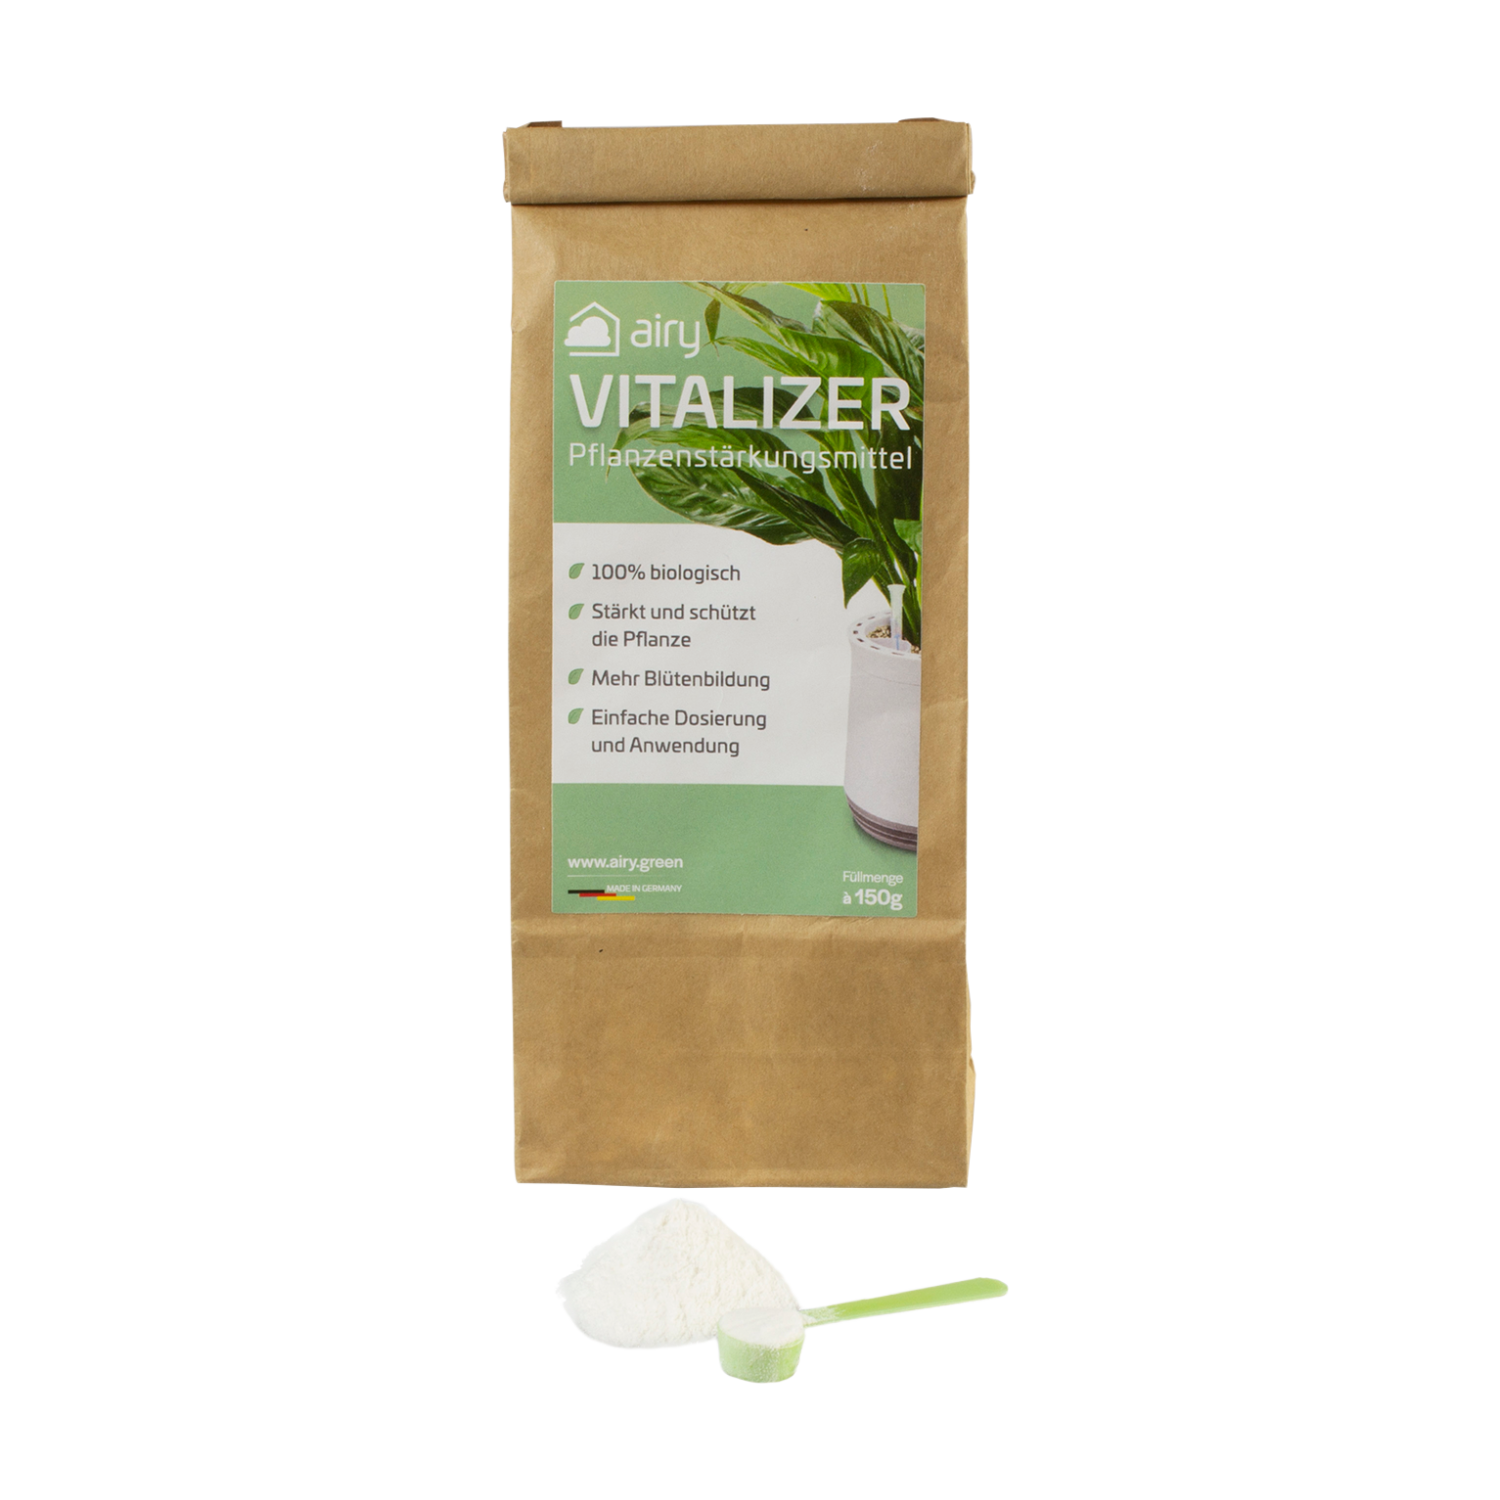 AIRY Vitalizer plant strengthener